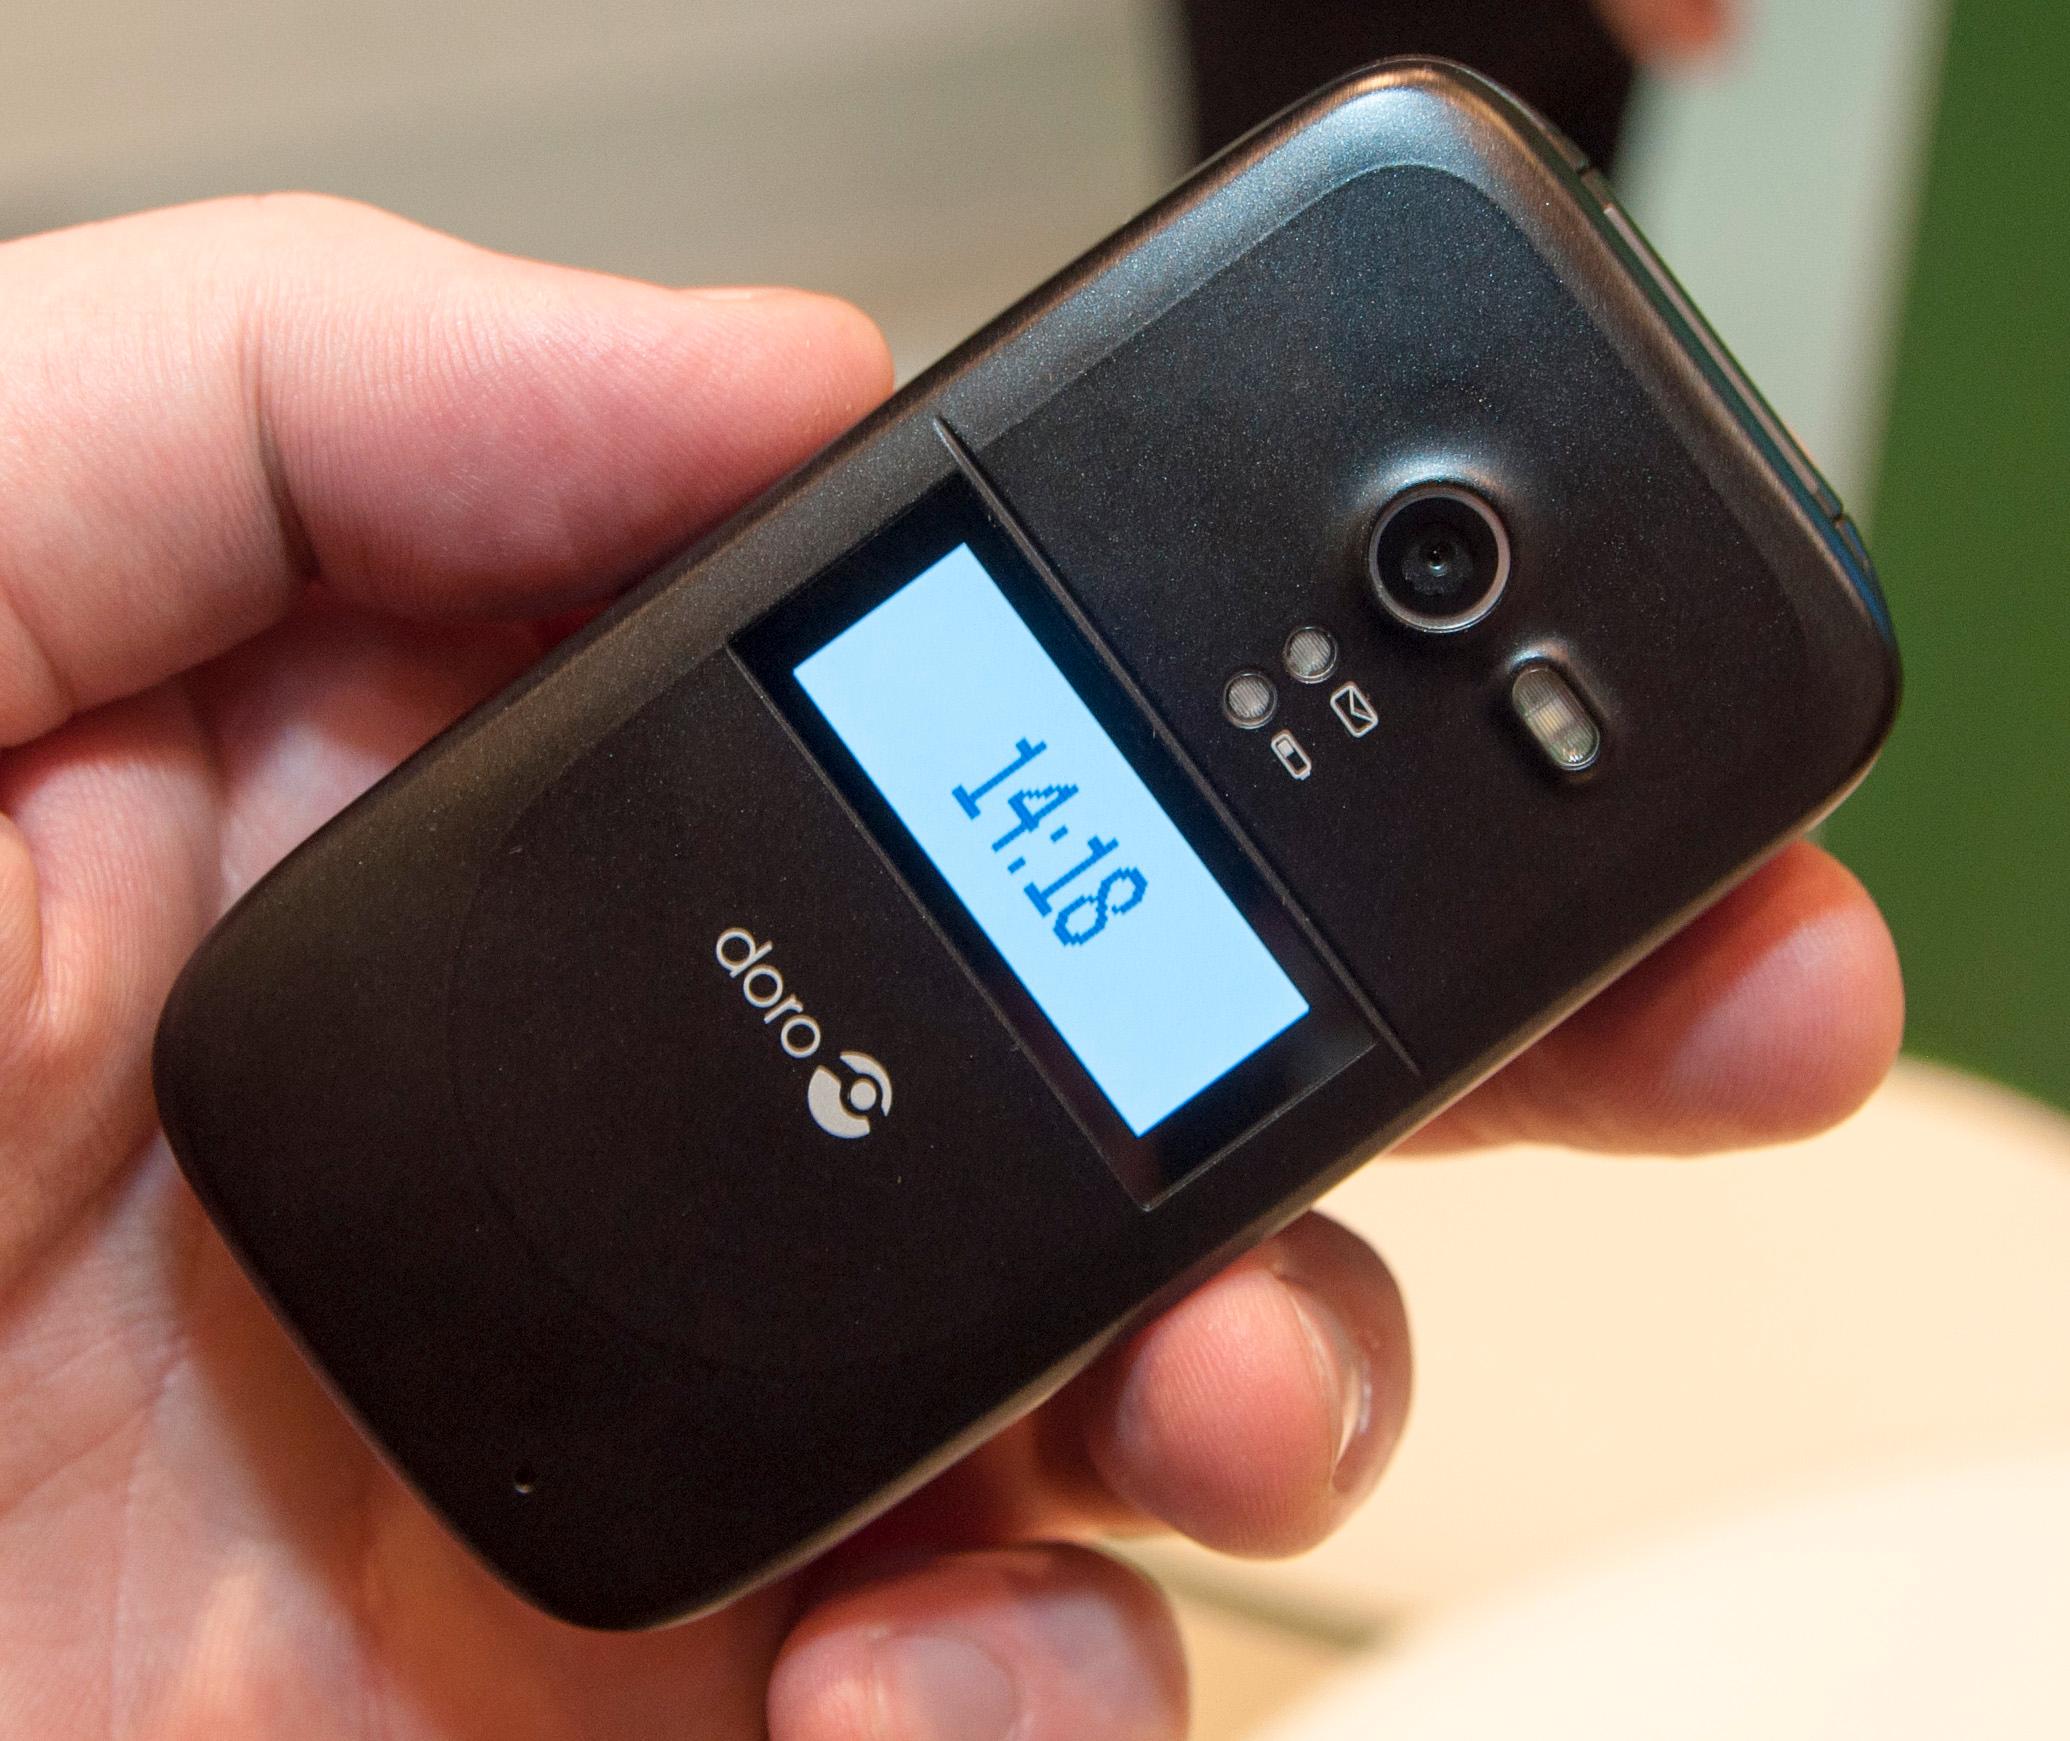 Doro PhoneEasy 622 i svart utgave. En egen knapp på siden av telefonen aktiverer displayet.Foto: Finn Jarle Kvalheim, Amobil.no